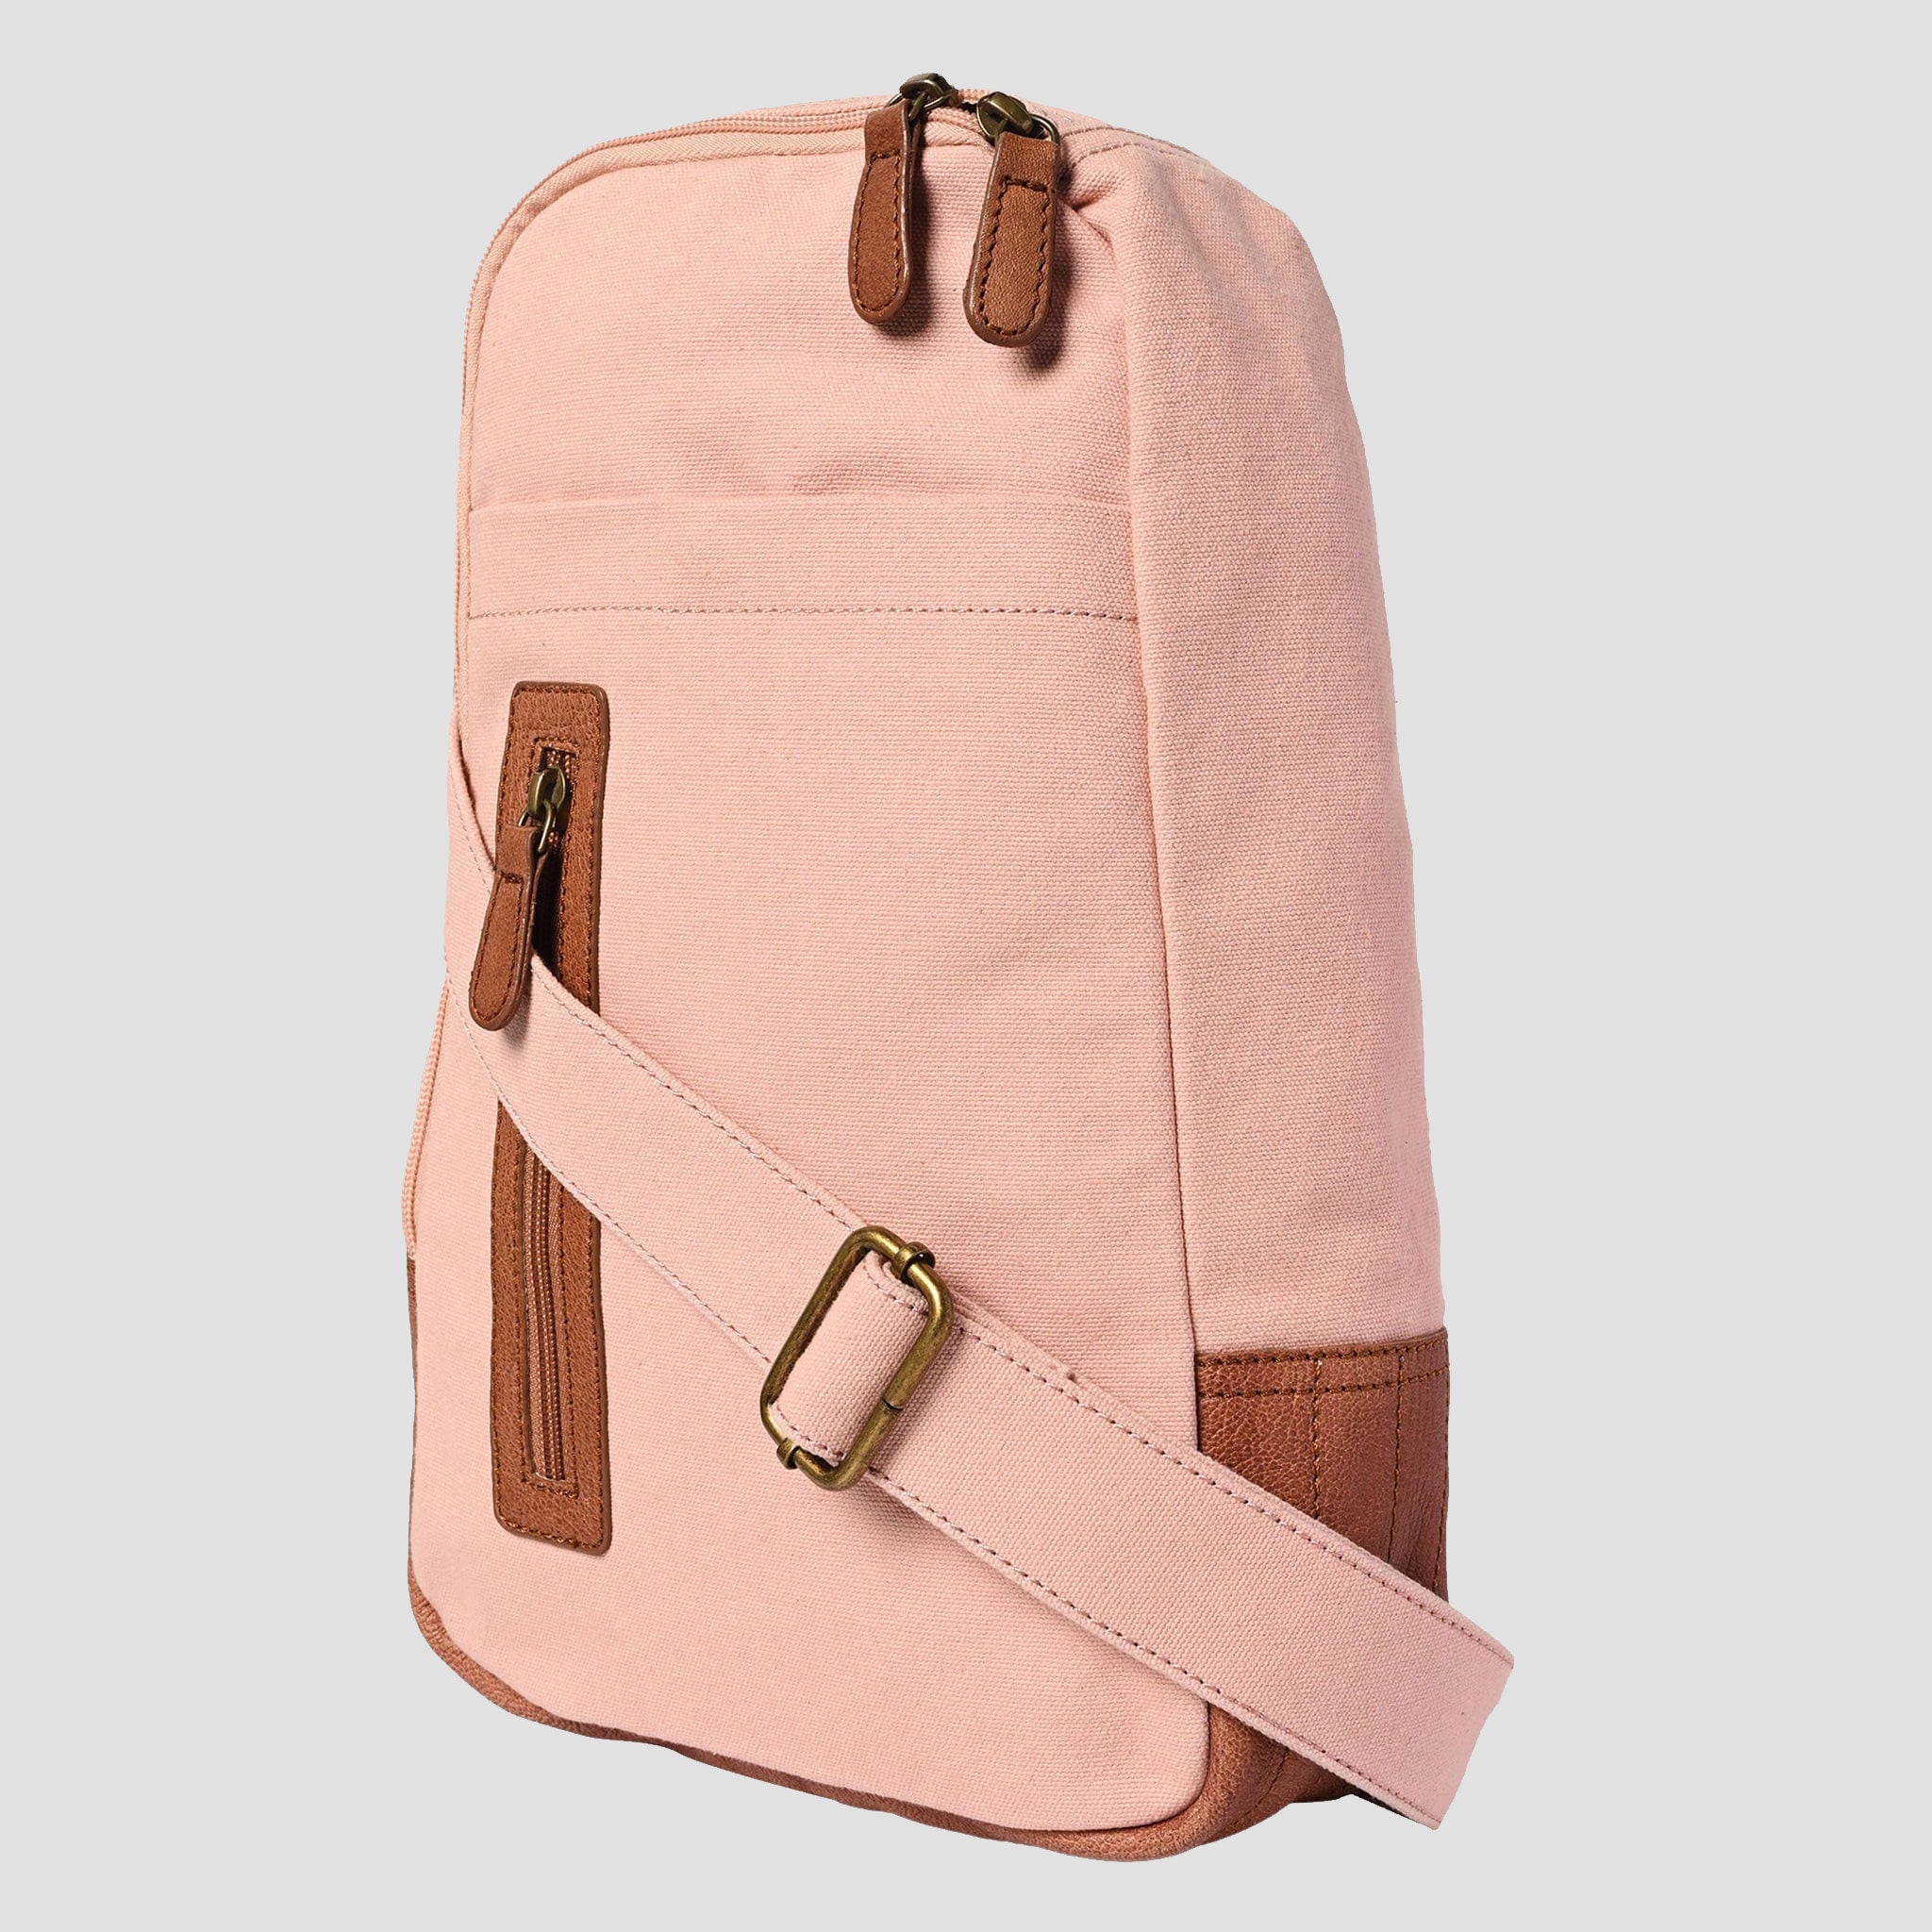 Mona-B Bag Mona B Pink Medium Canvas Messenger Crossbody Bag with Stylish Design for Women